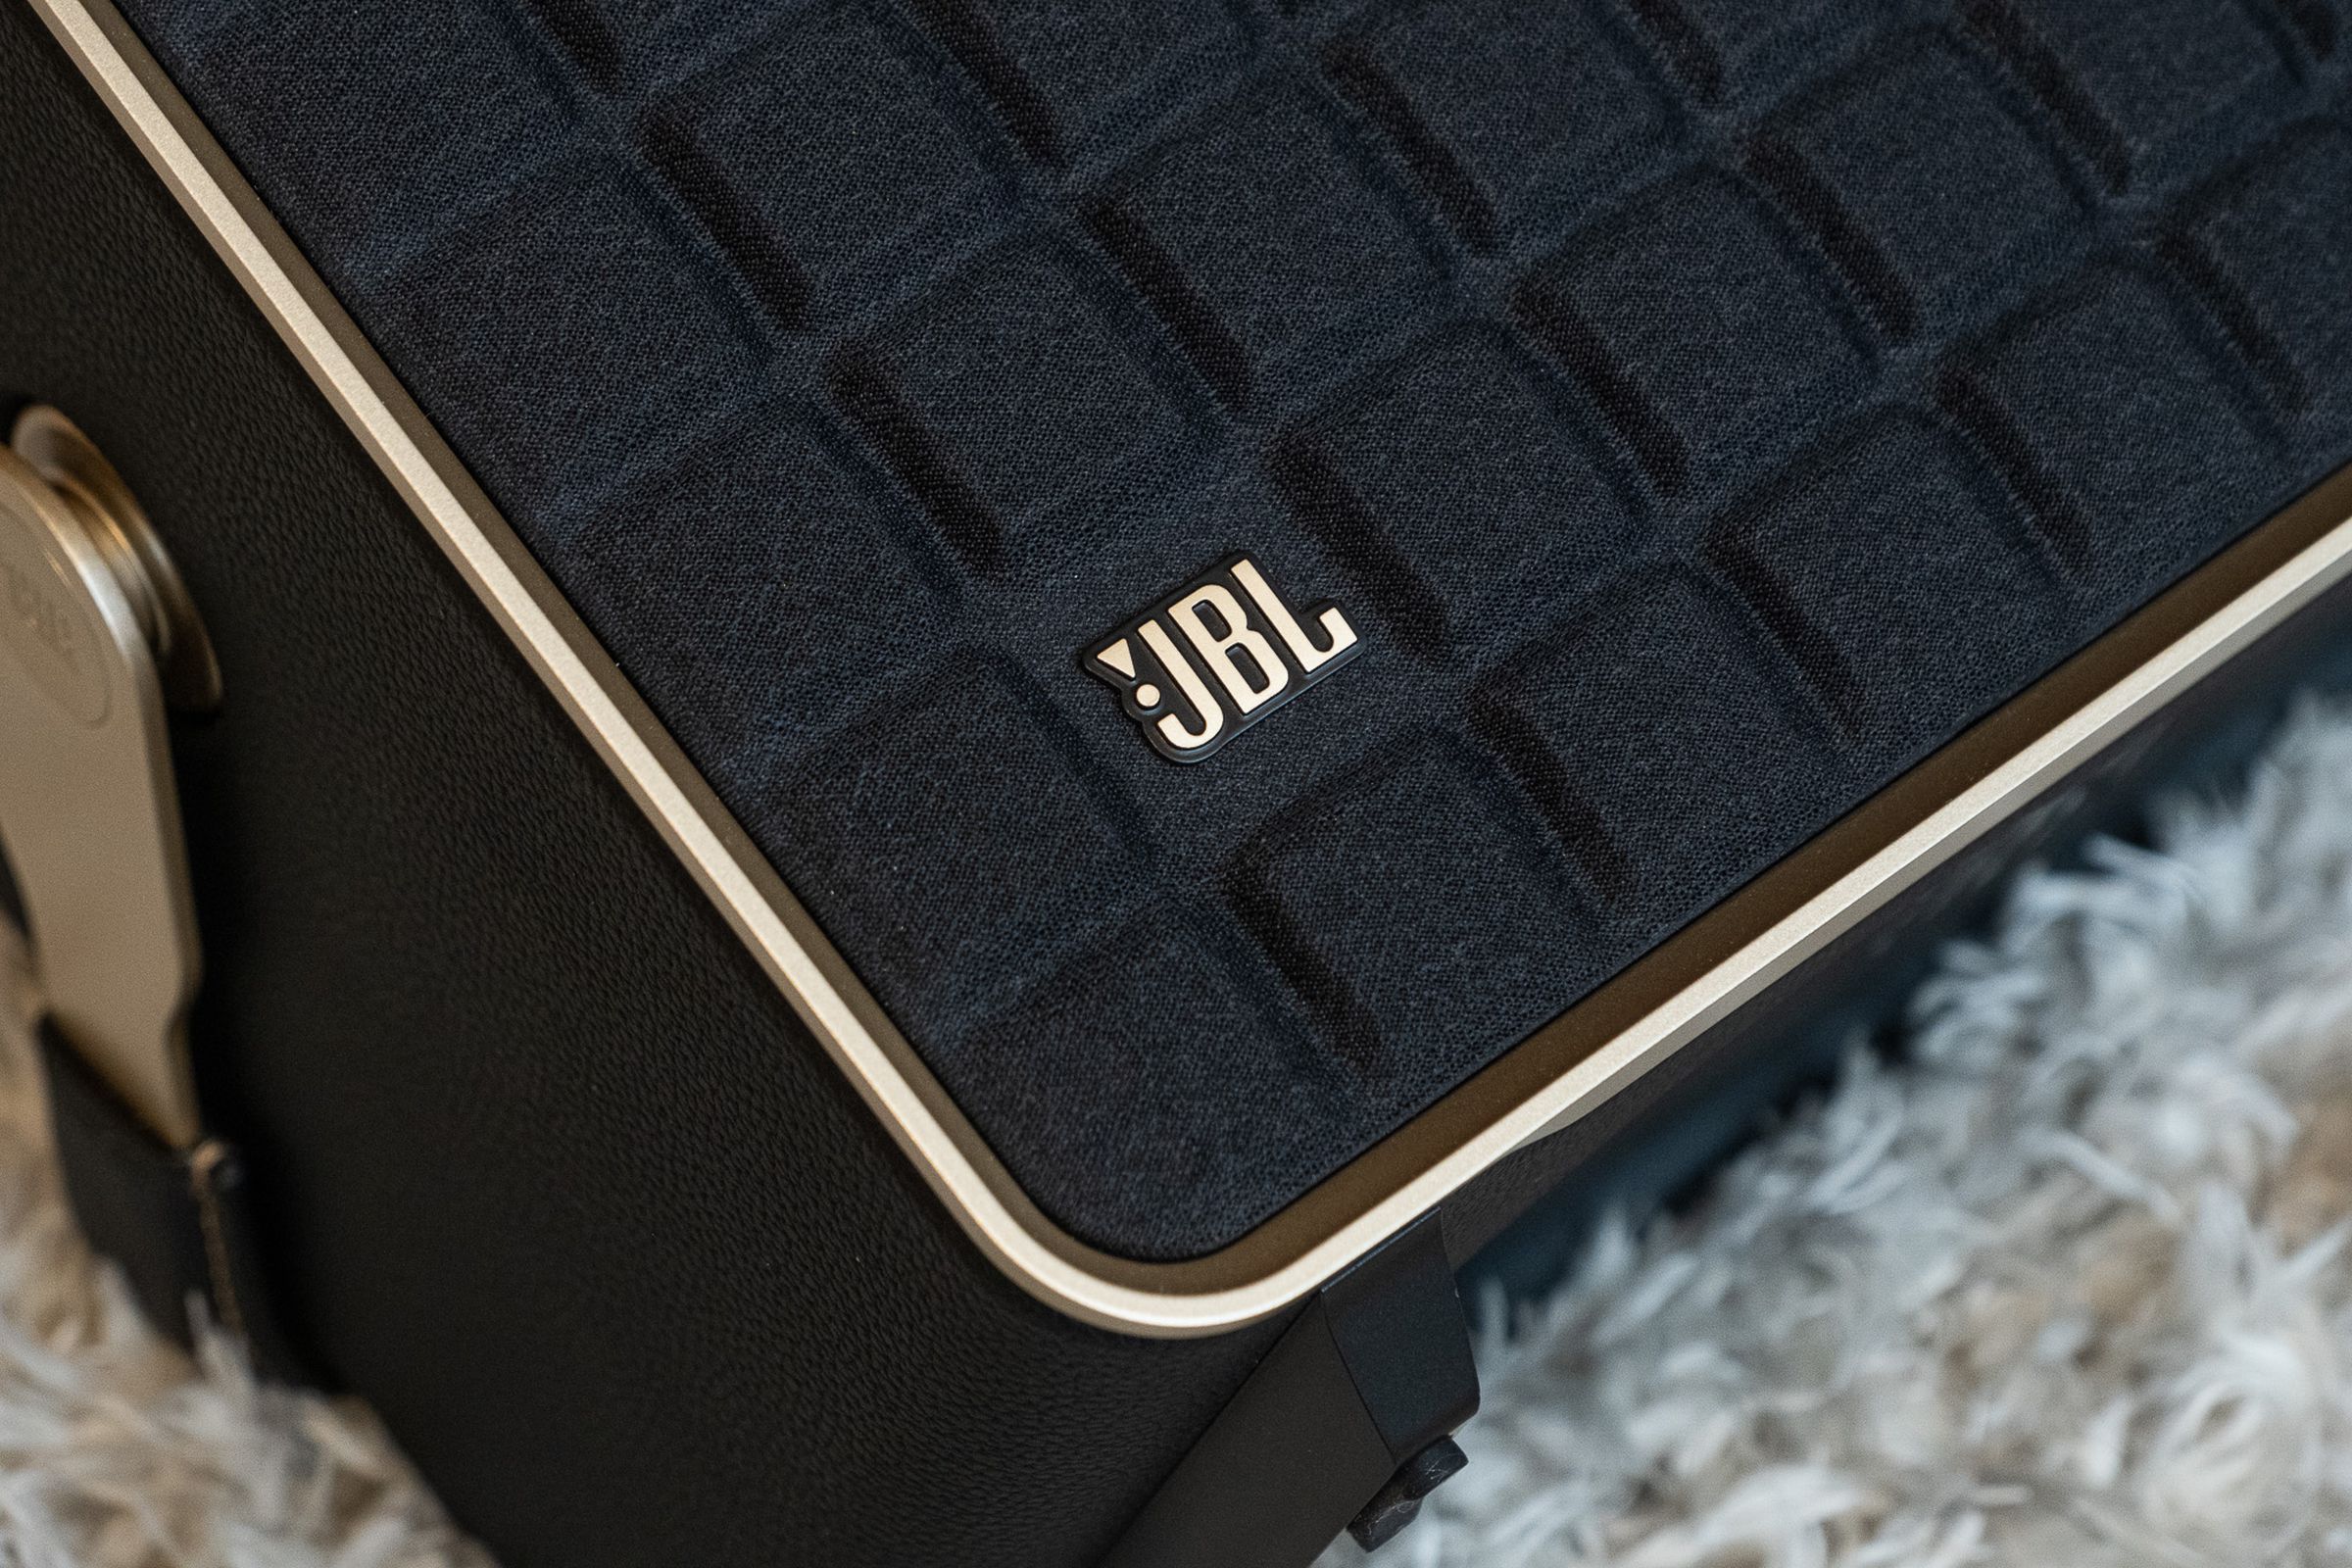 A photo of JBL’s Authentics 300 smart speaker.